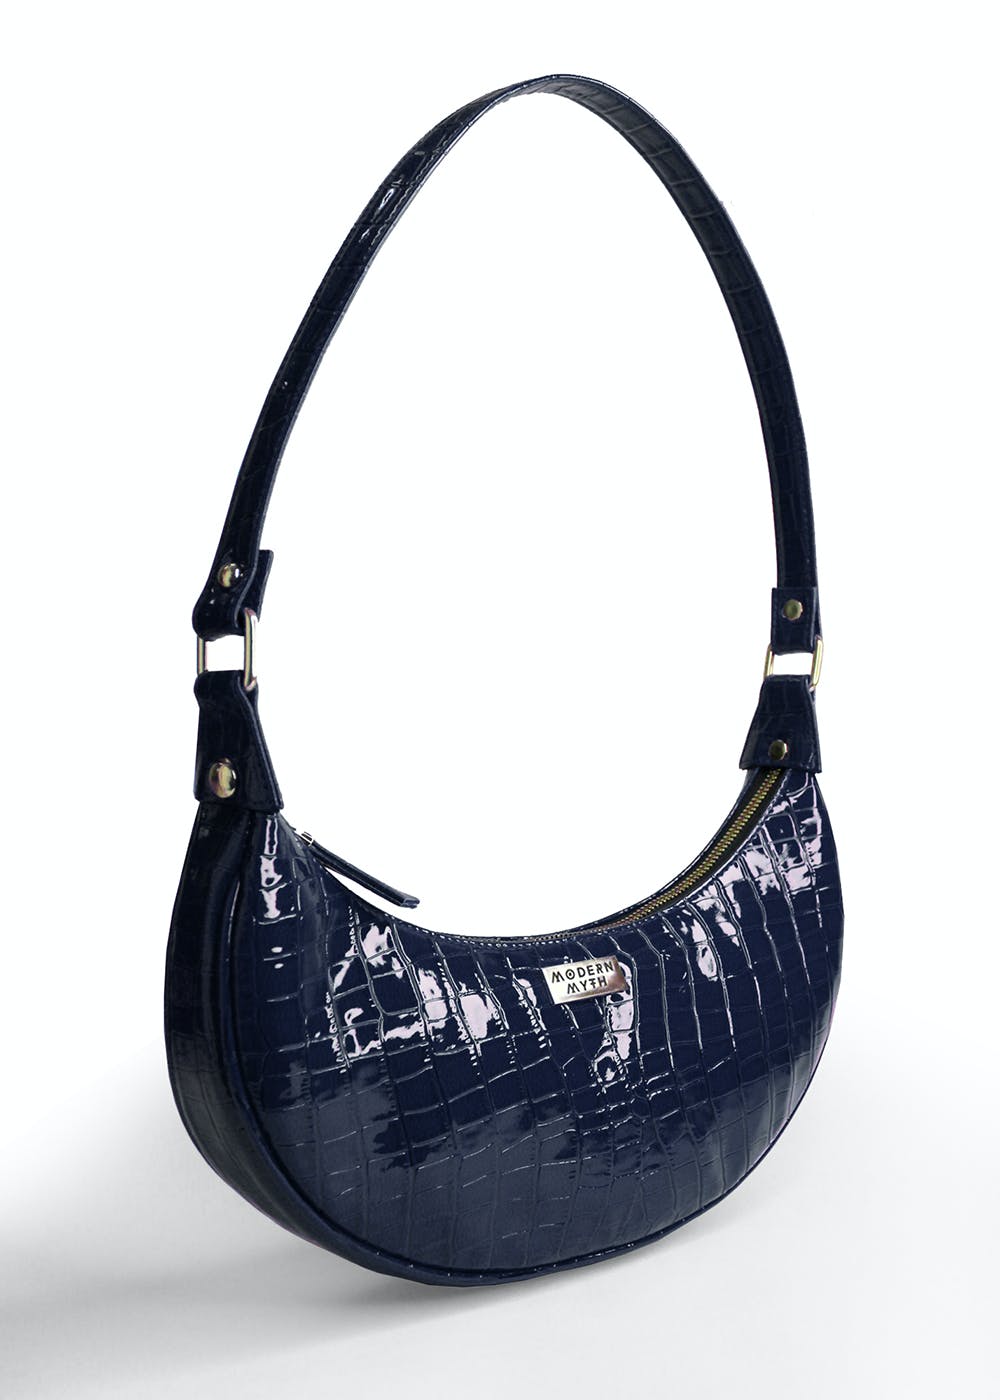 Get Blue Croc Half Moon Baguette Shoulder Bag at ₹ 1199 | LBB Shop